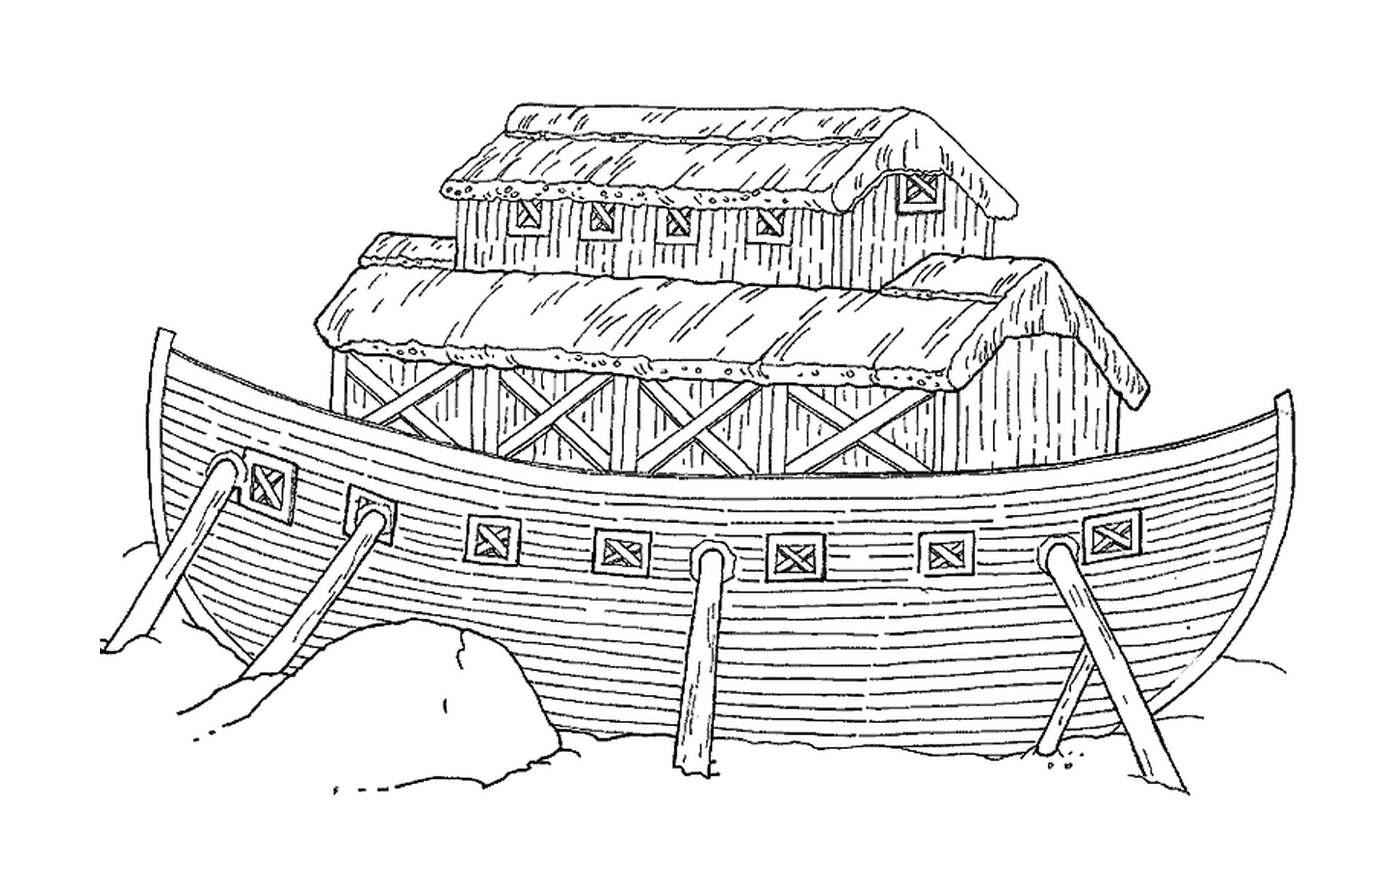  Un viejo barco de madera 